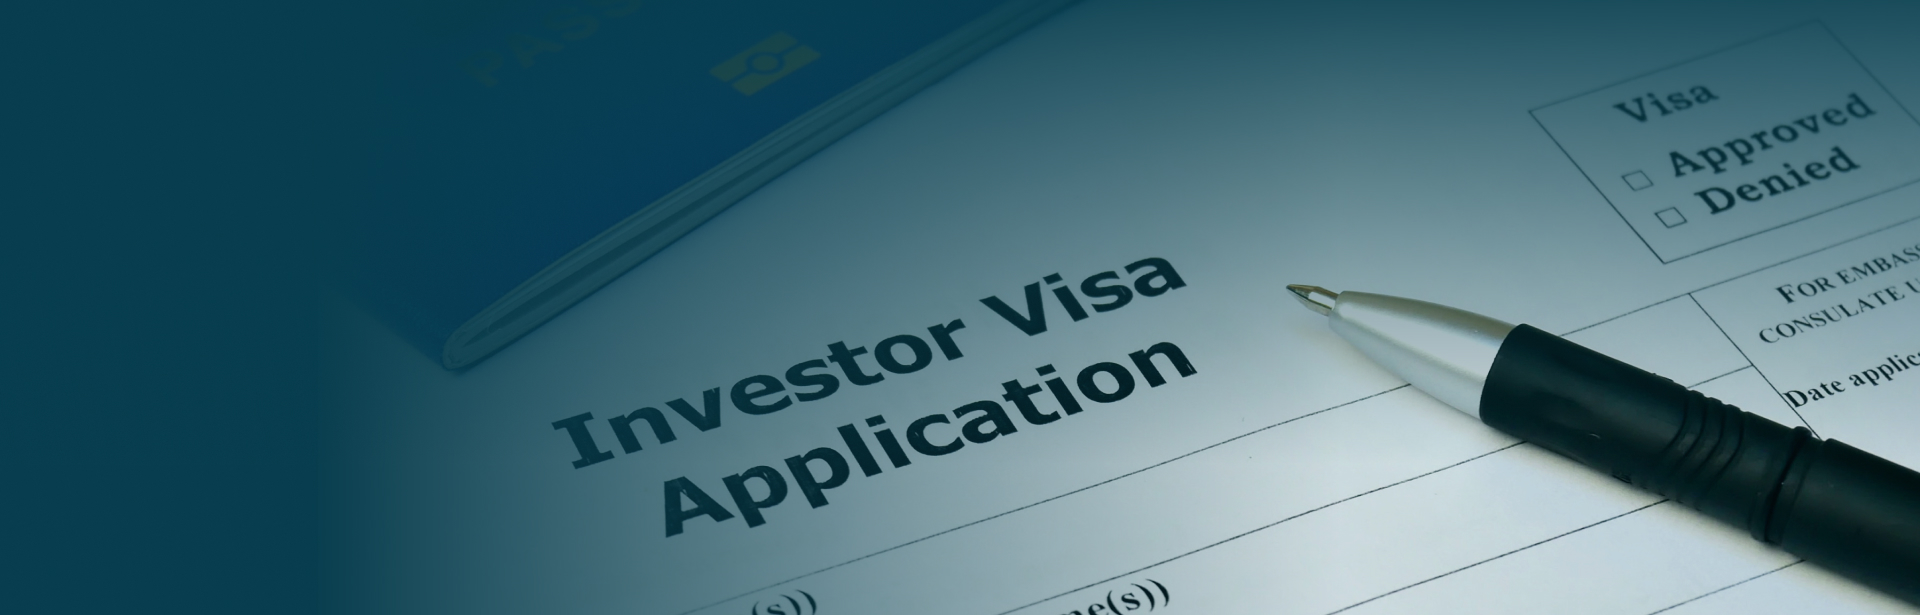 Benefits of investor visa lawyer